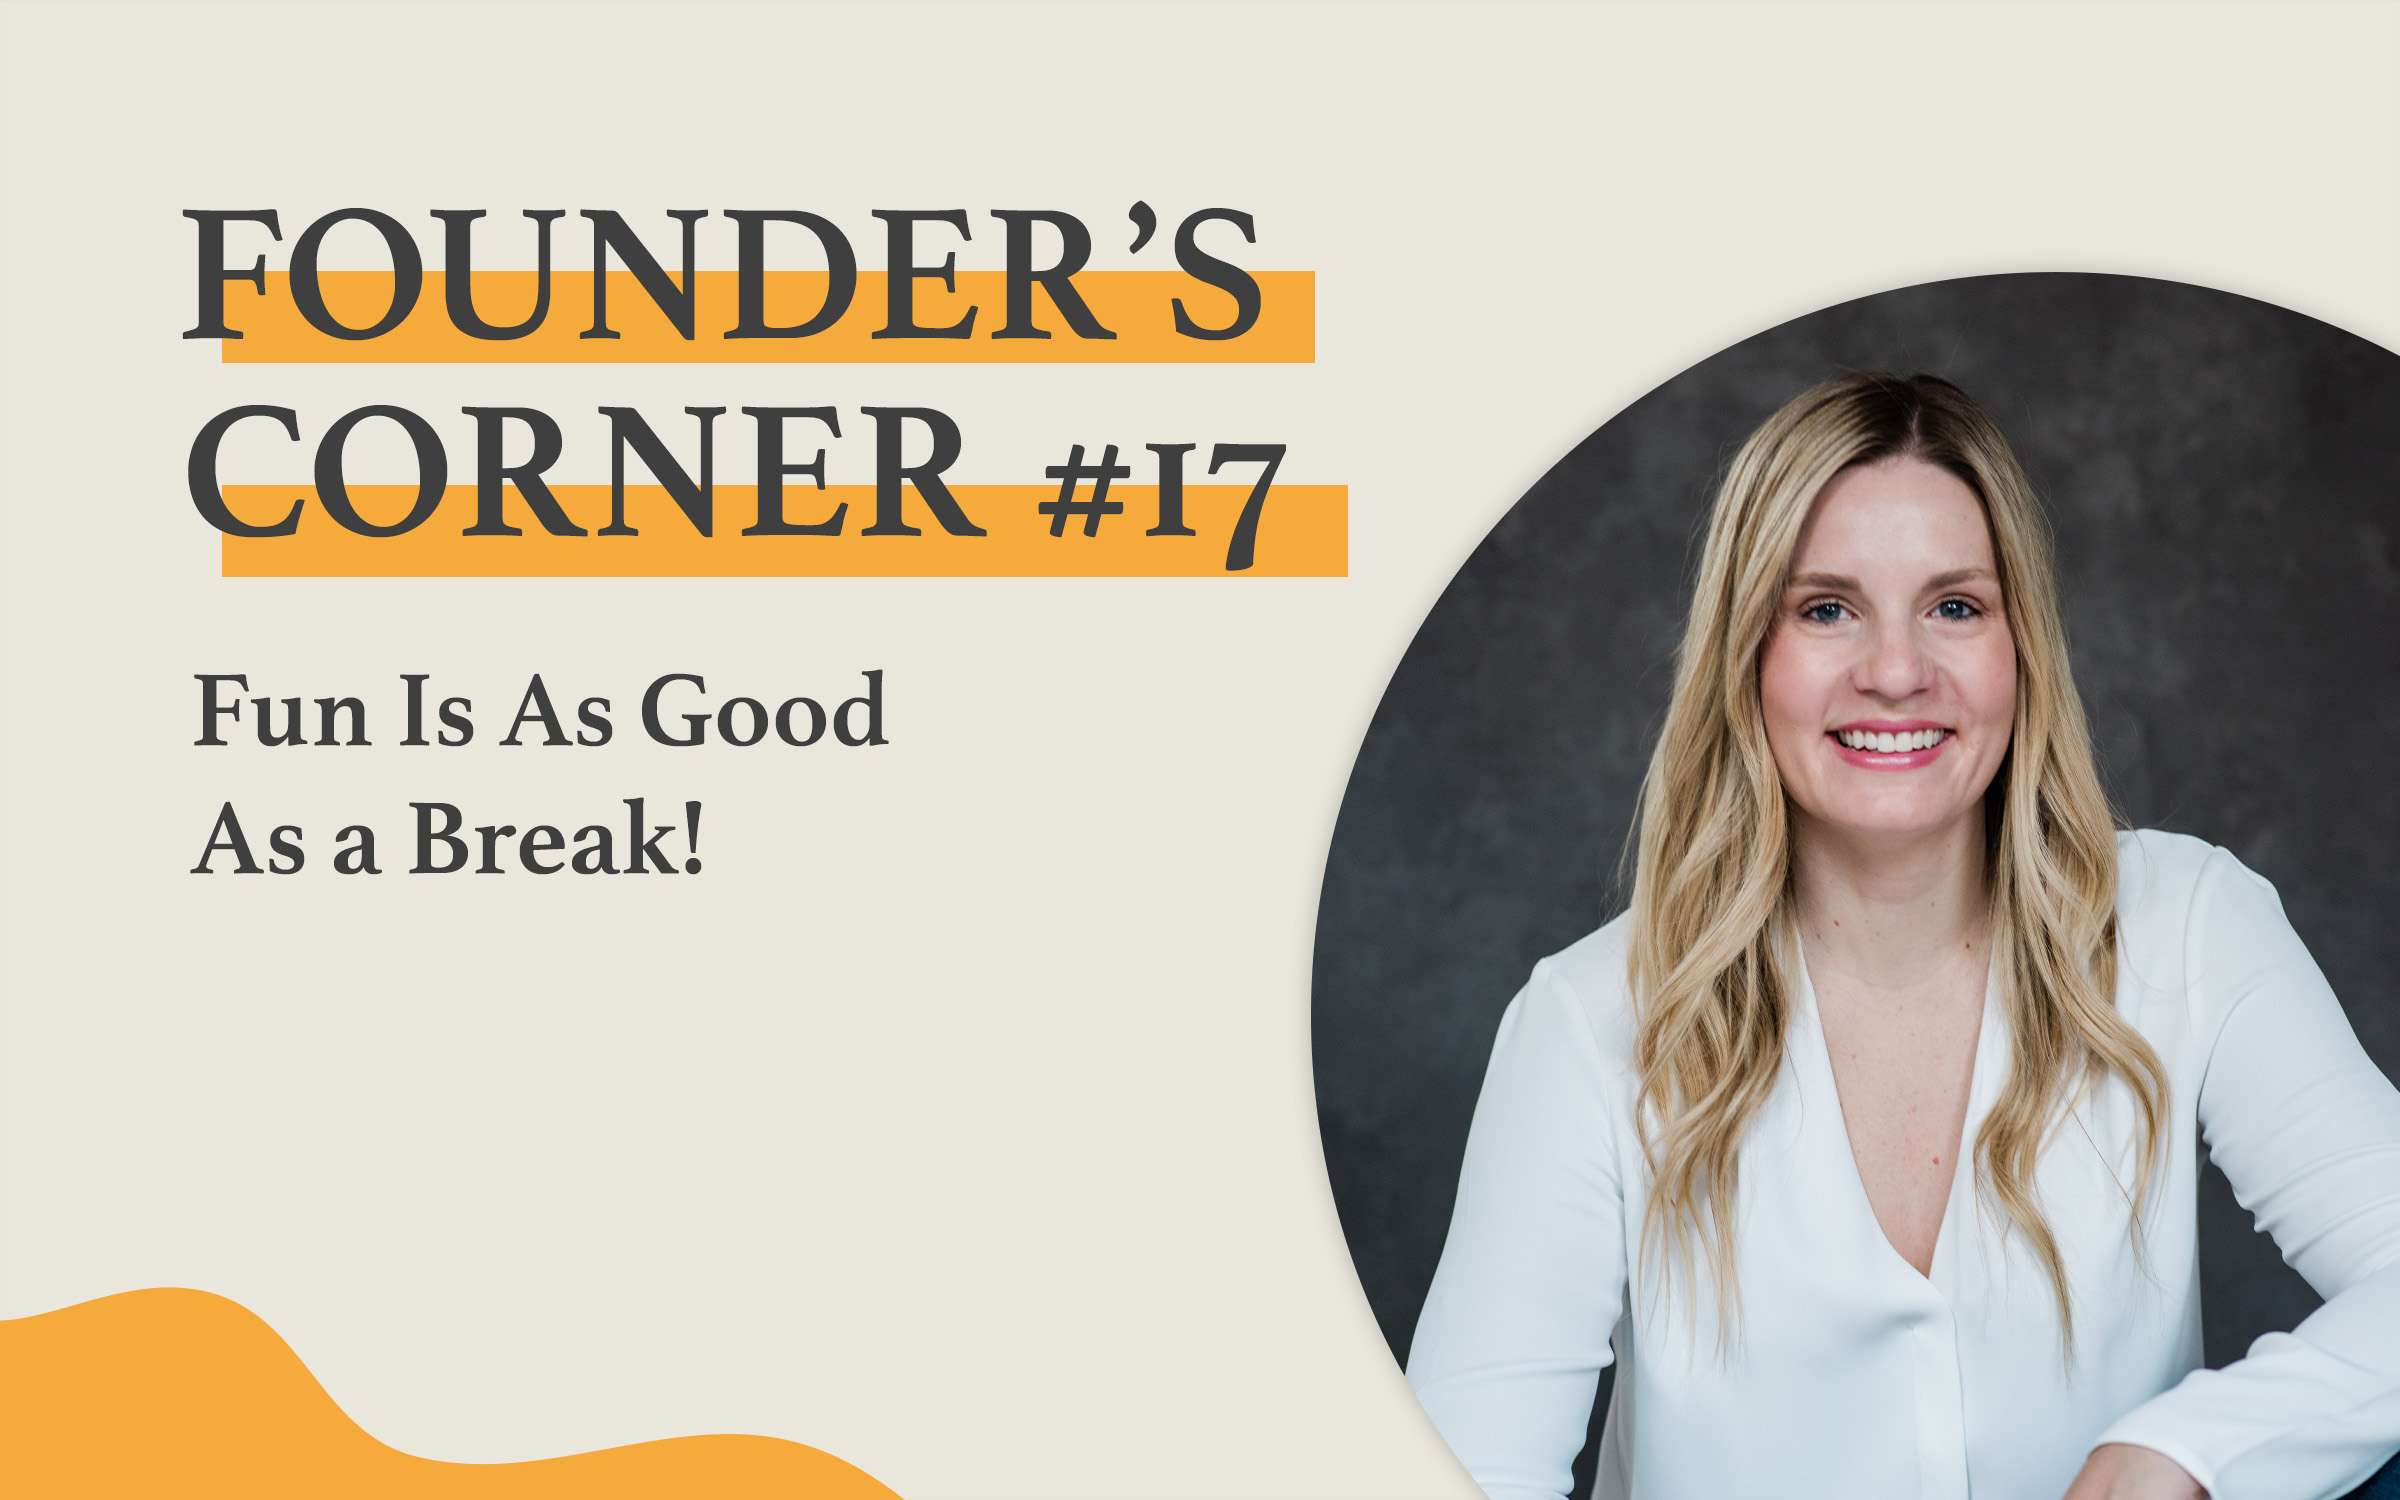 Founder's Corner #17: Fun Is As Good As a Break!